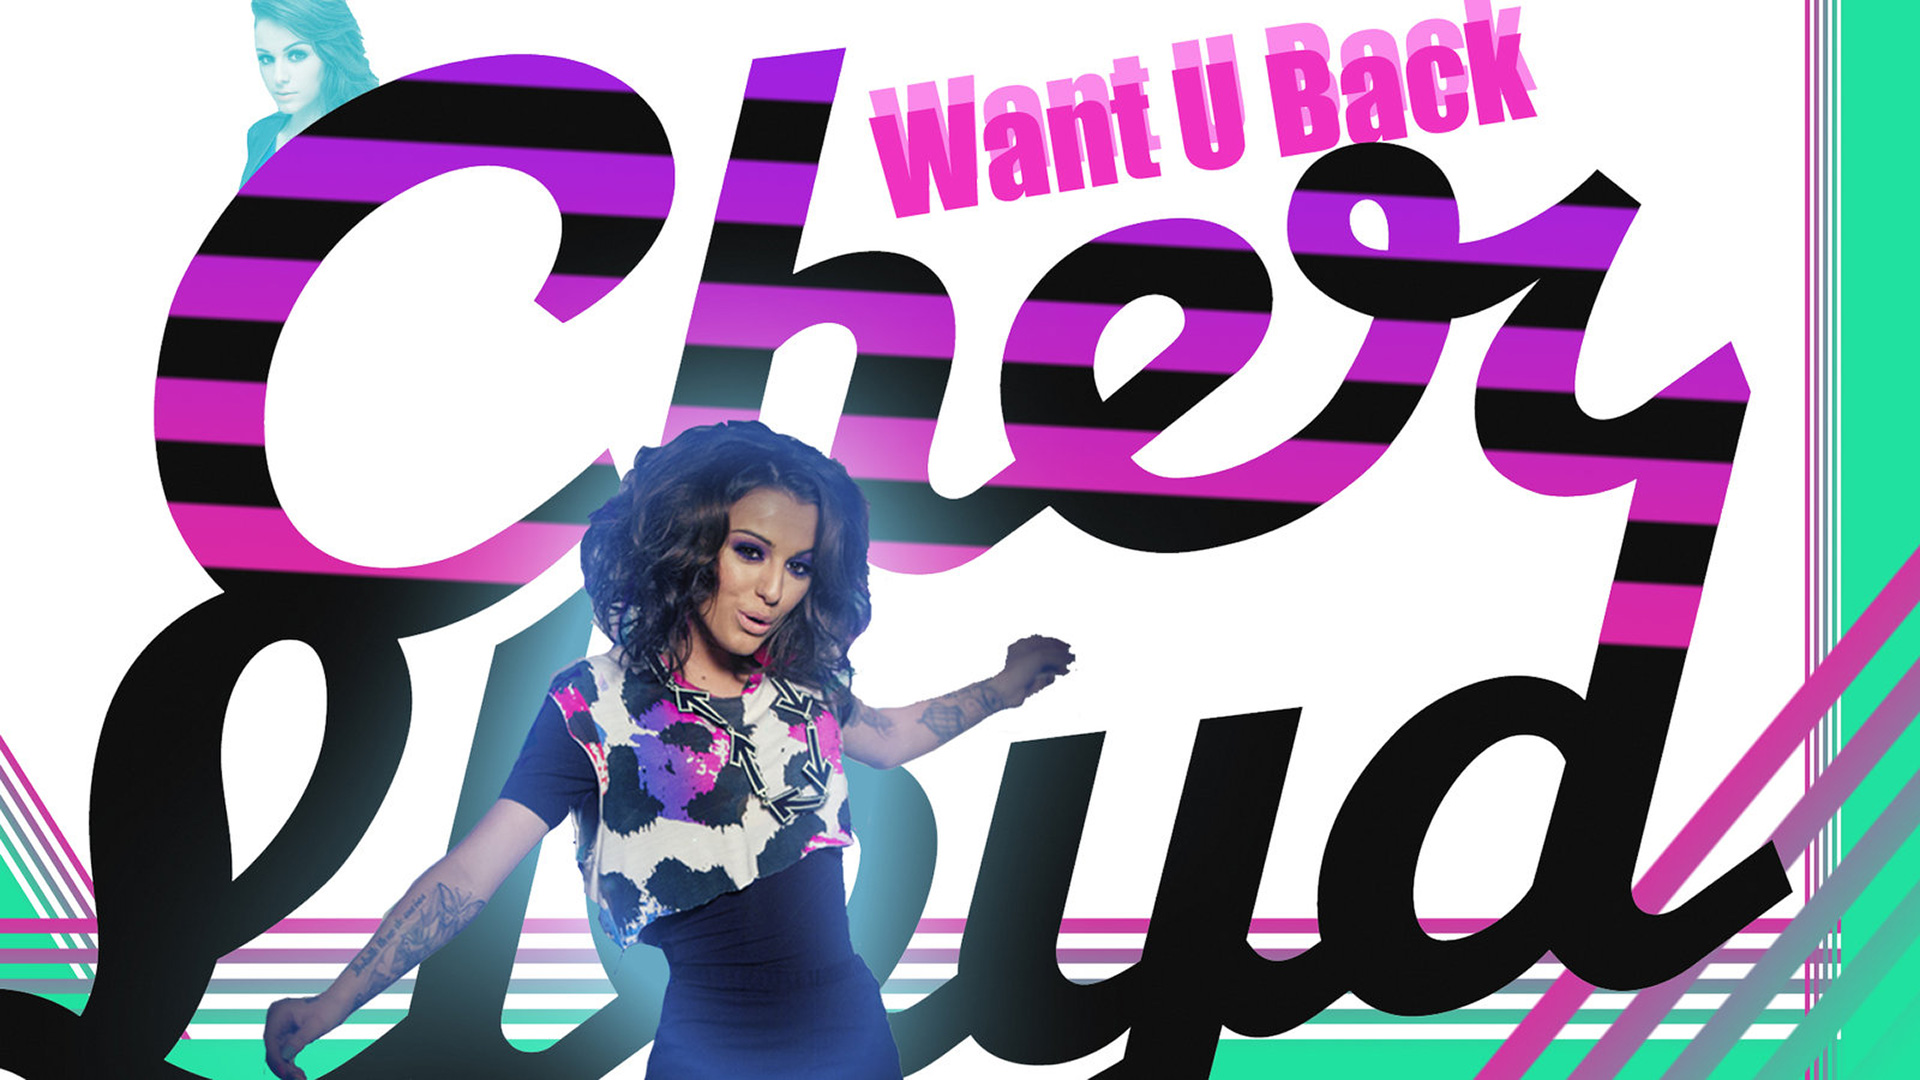 Music Cher Lloyd Wallpaper Resolution 19x1080 Id Wallha Com